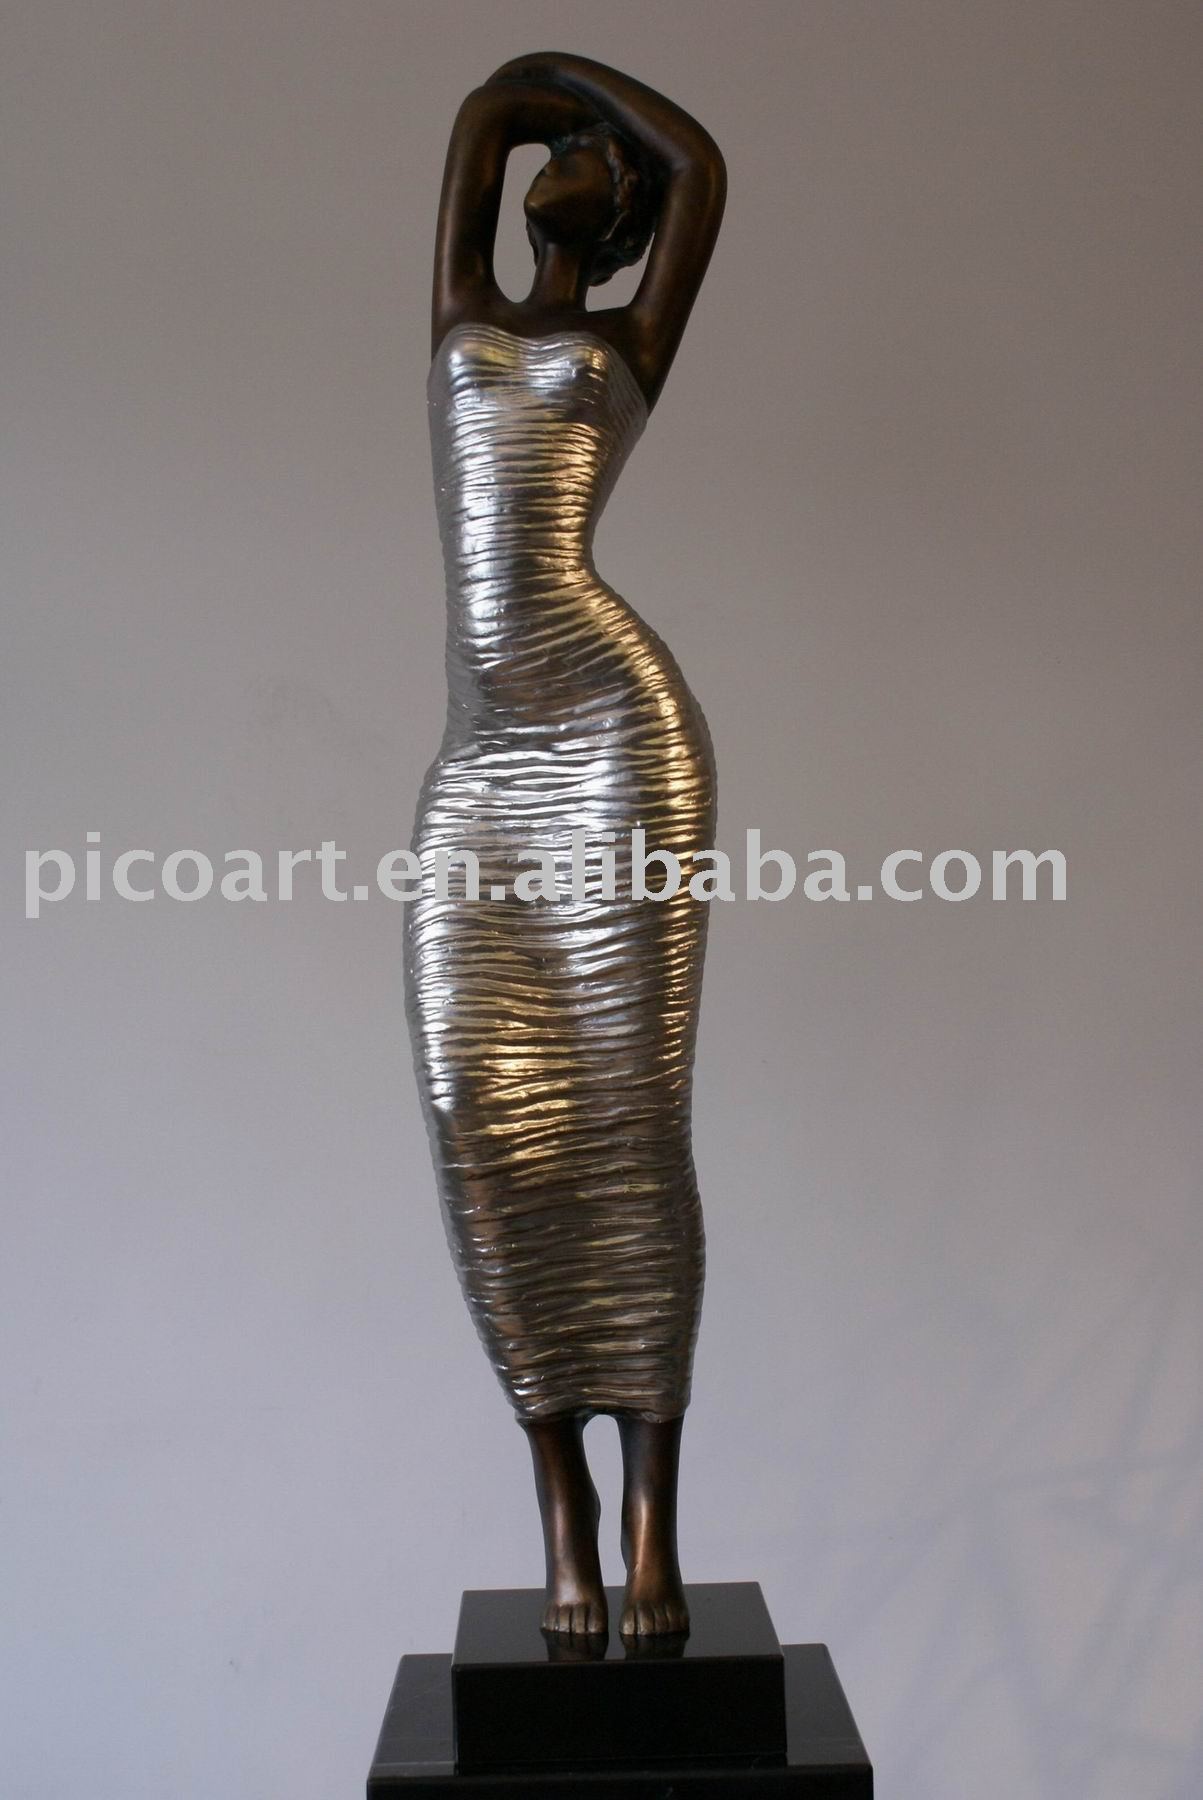 Human Sculpture,Figure Sculpture - Buy Human Sculpture,Figure ...